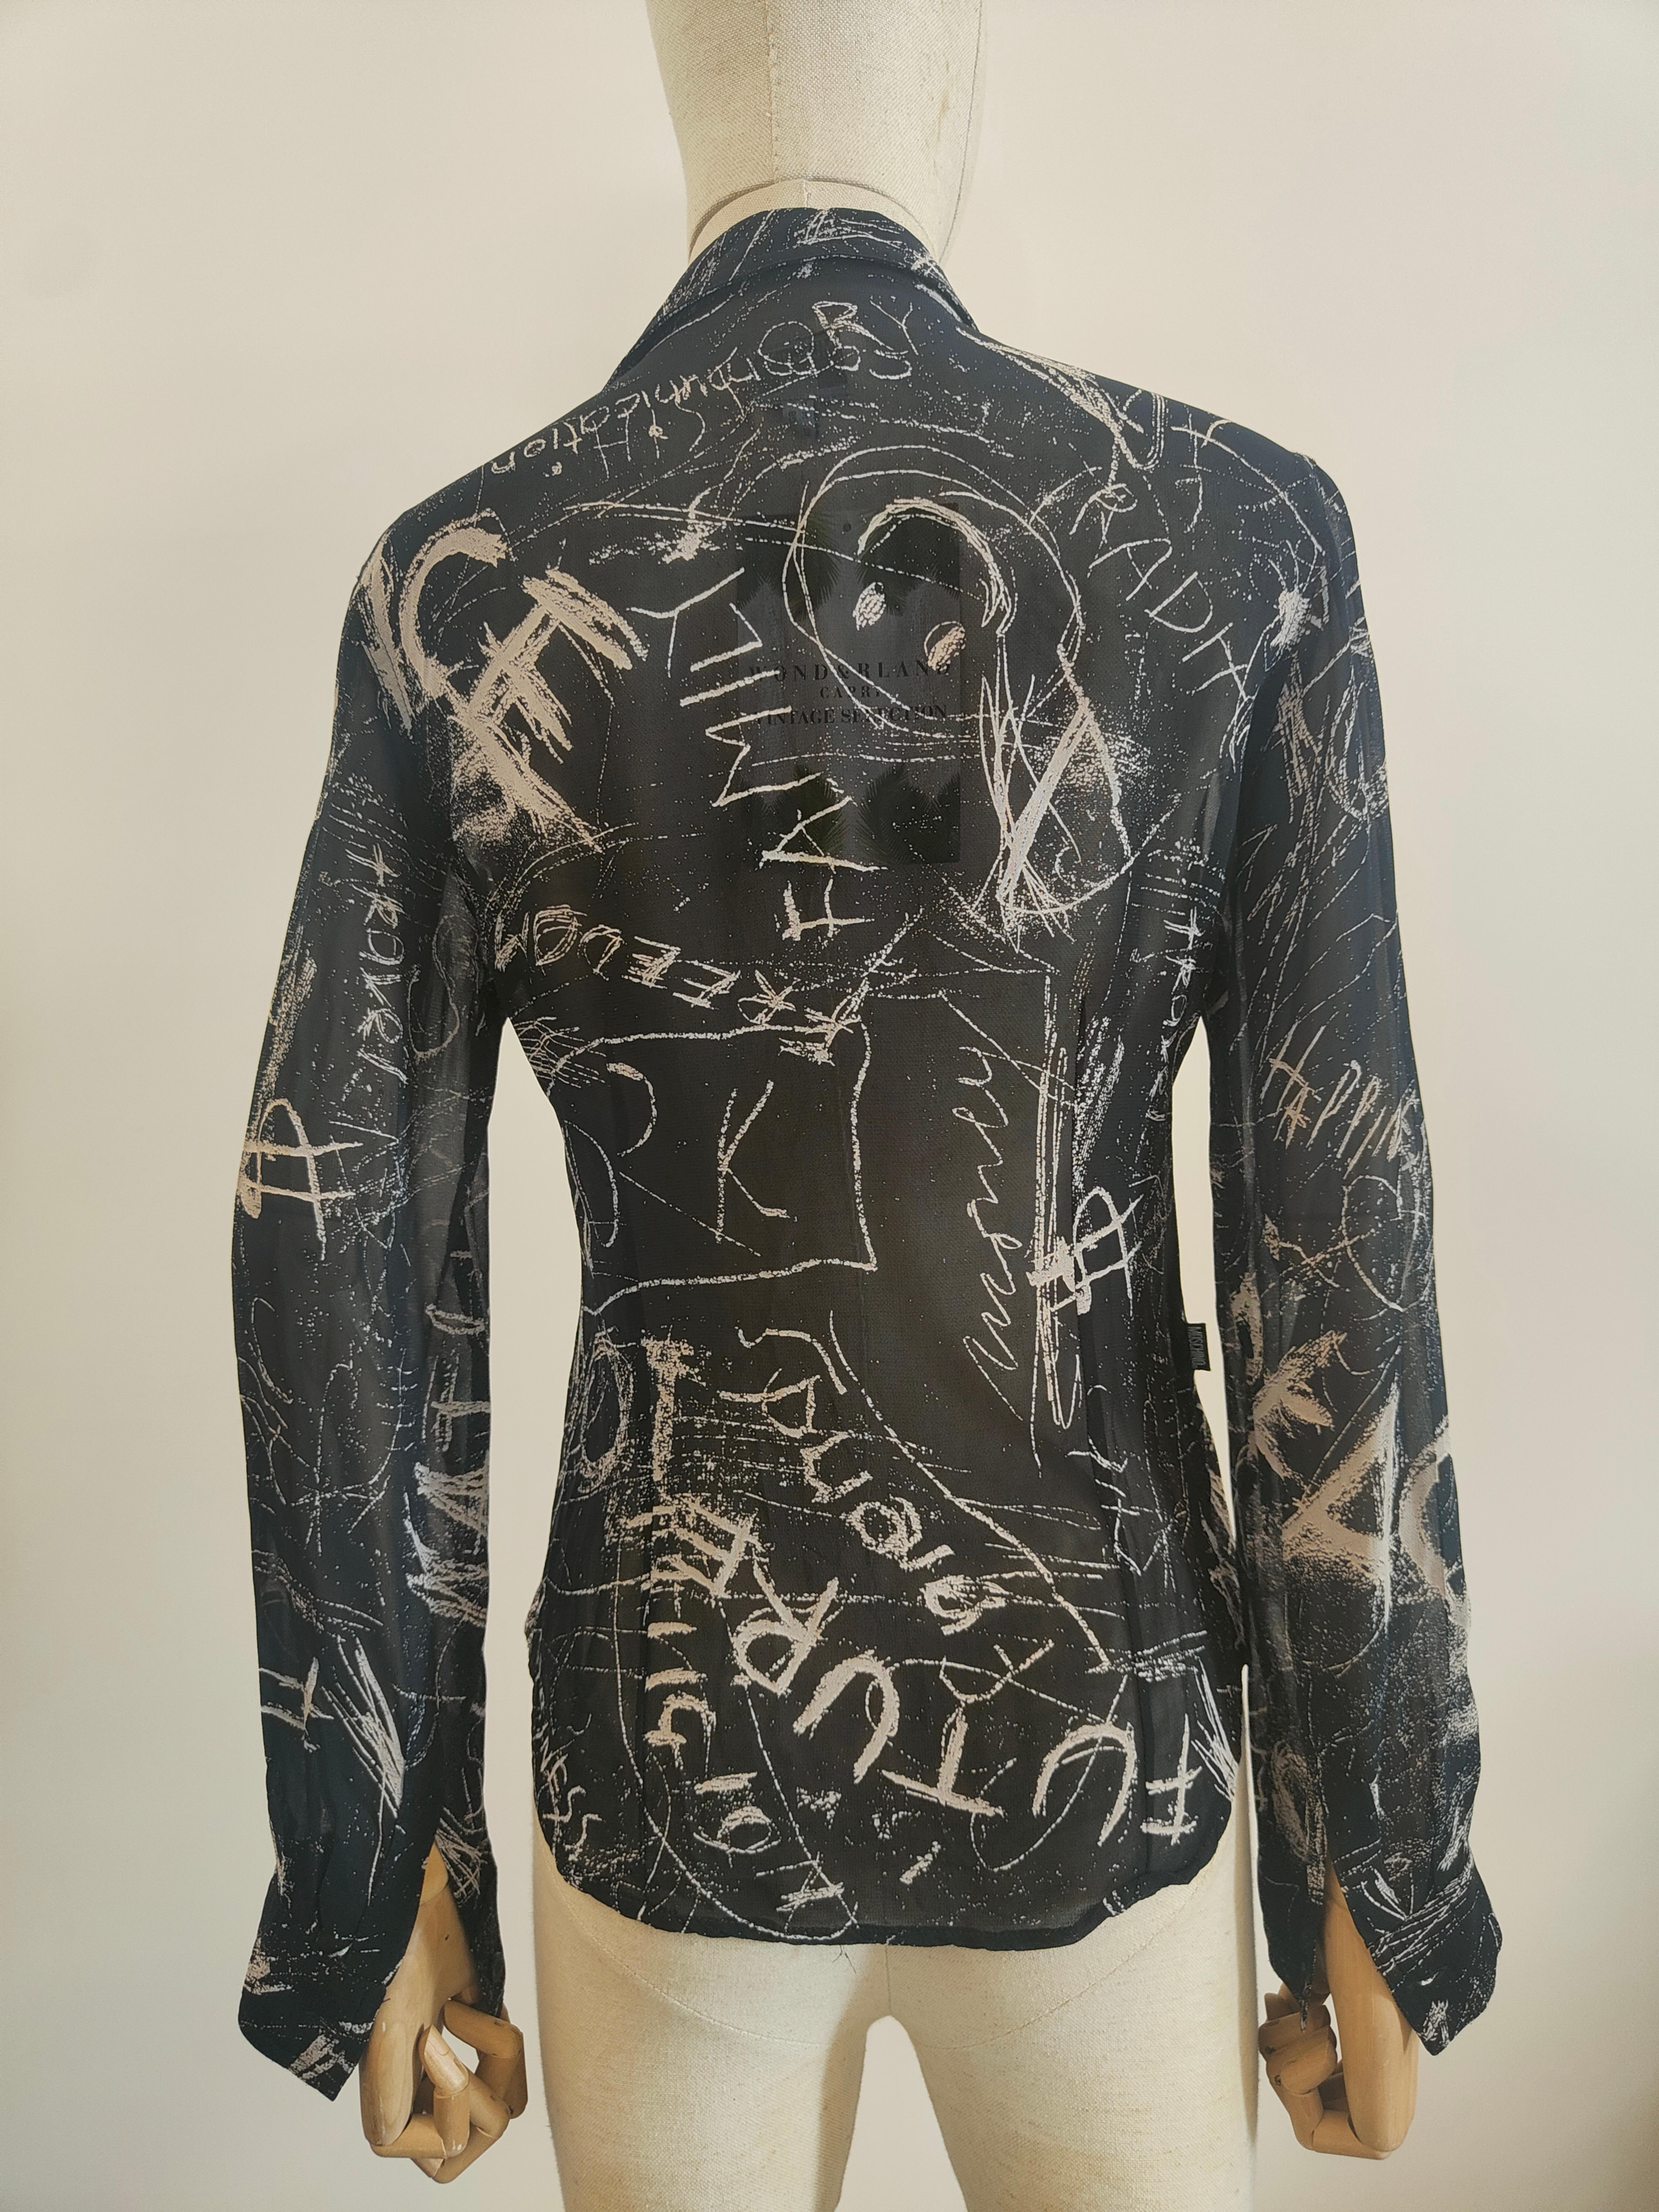 Moschino see through graffiti shirt For Sale 4